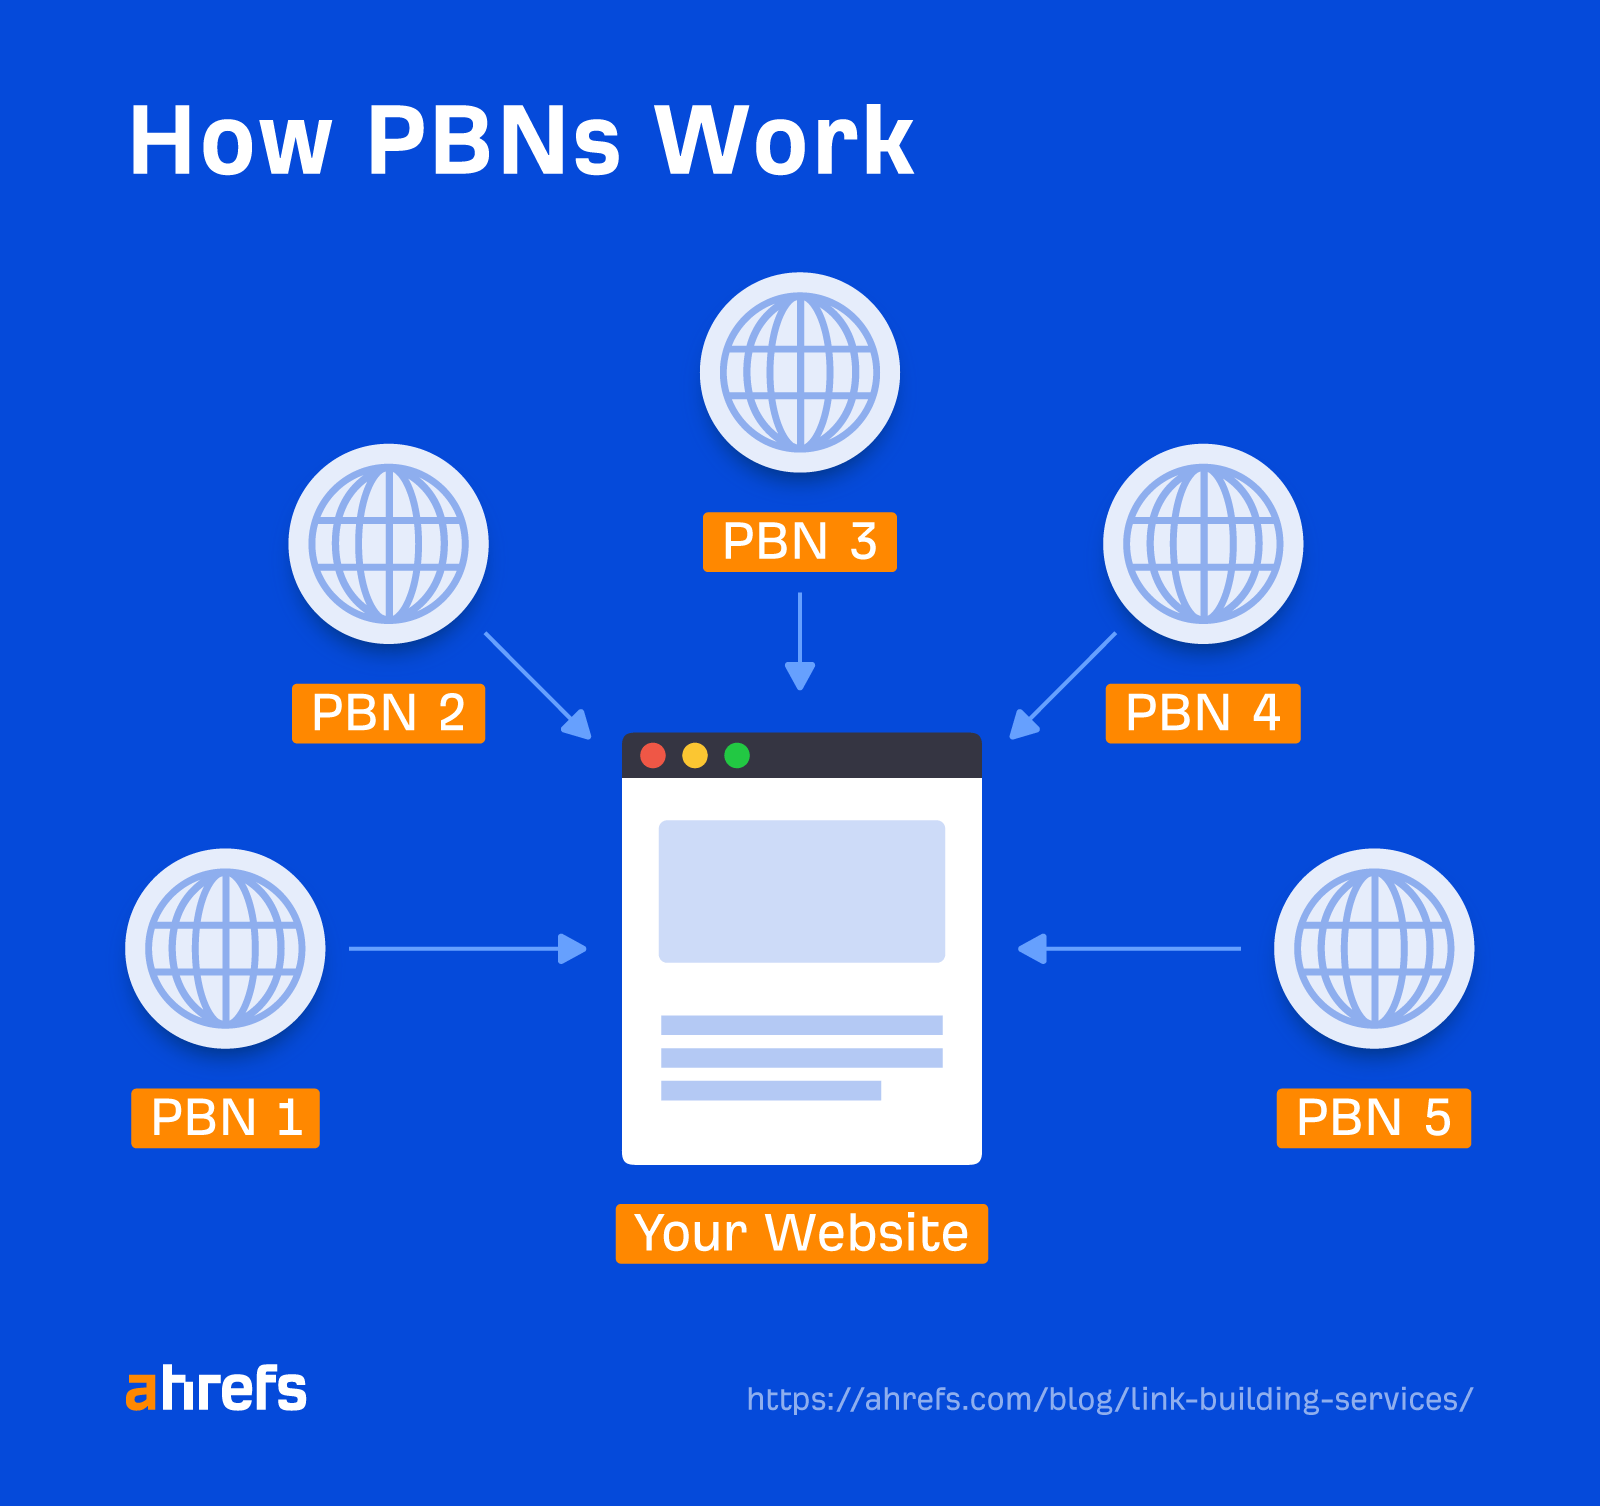 How PBNs work